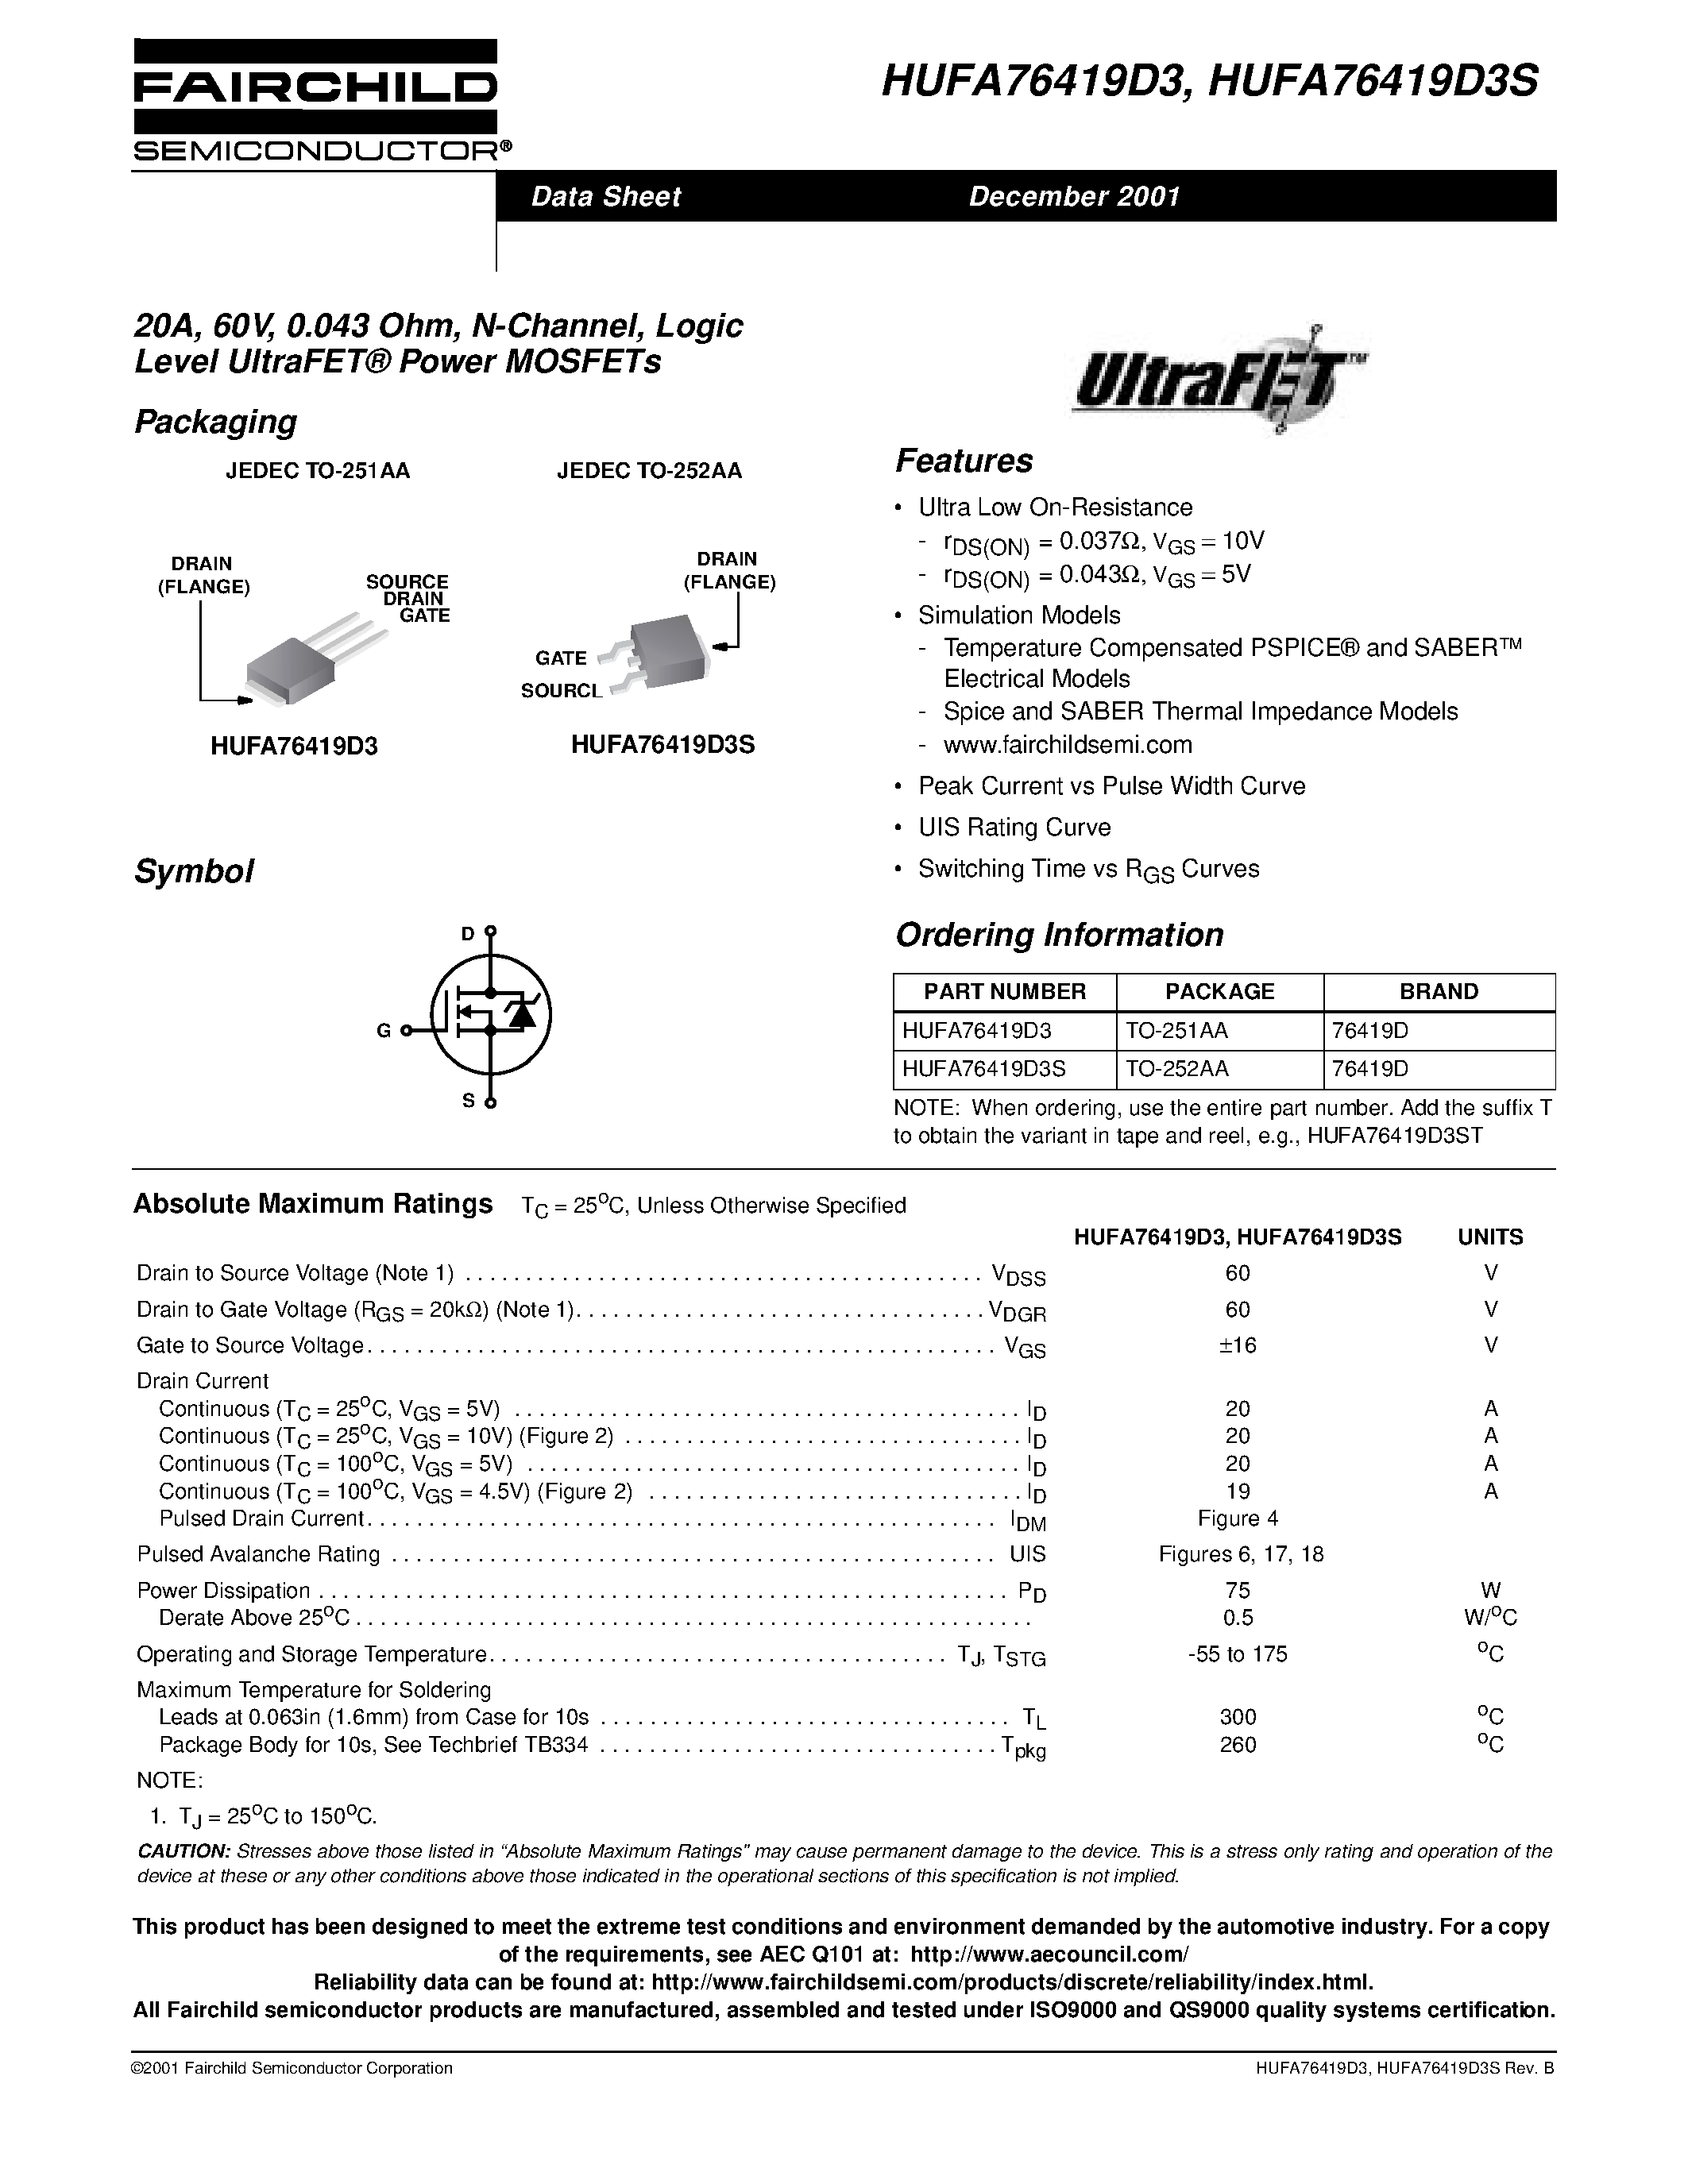 Даташит HUFA76419D3S - 20A/ 60V/ 0.043 Ohm/ N-Channel/ Logic Level UltraFET Power MOSFETs страница 1